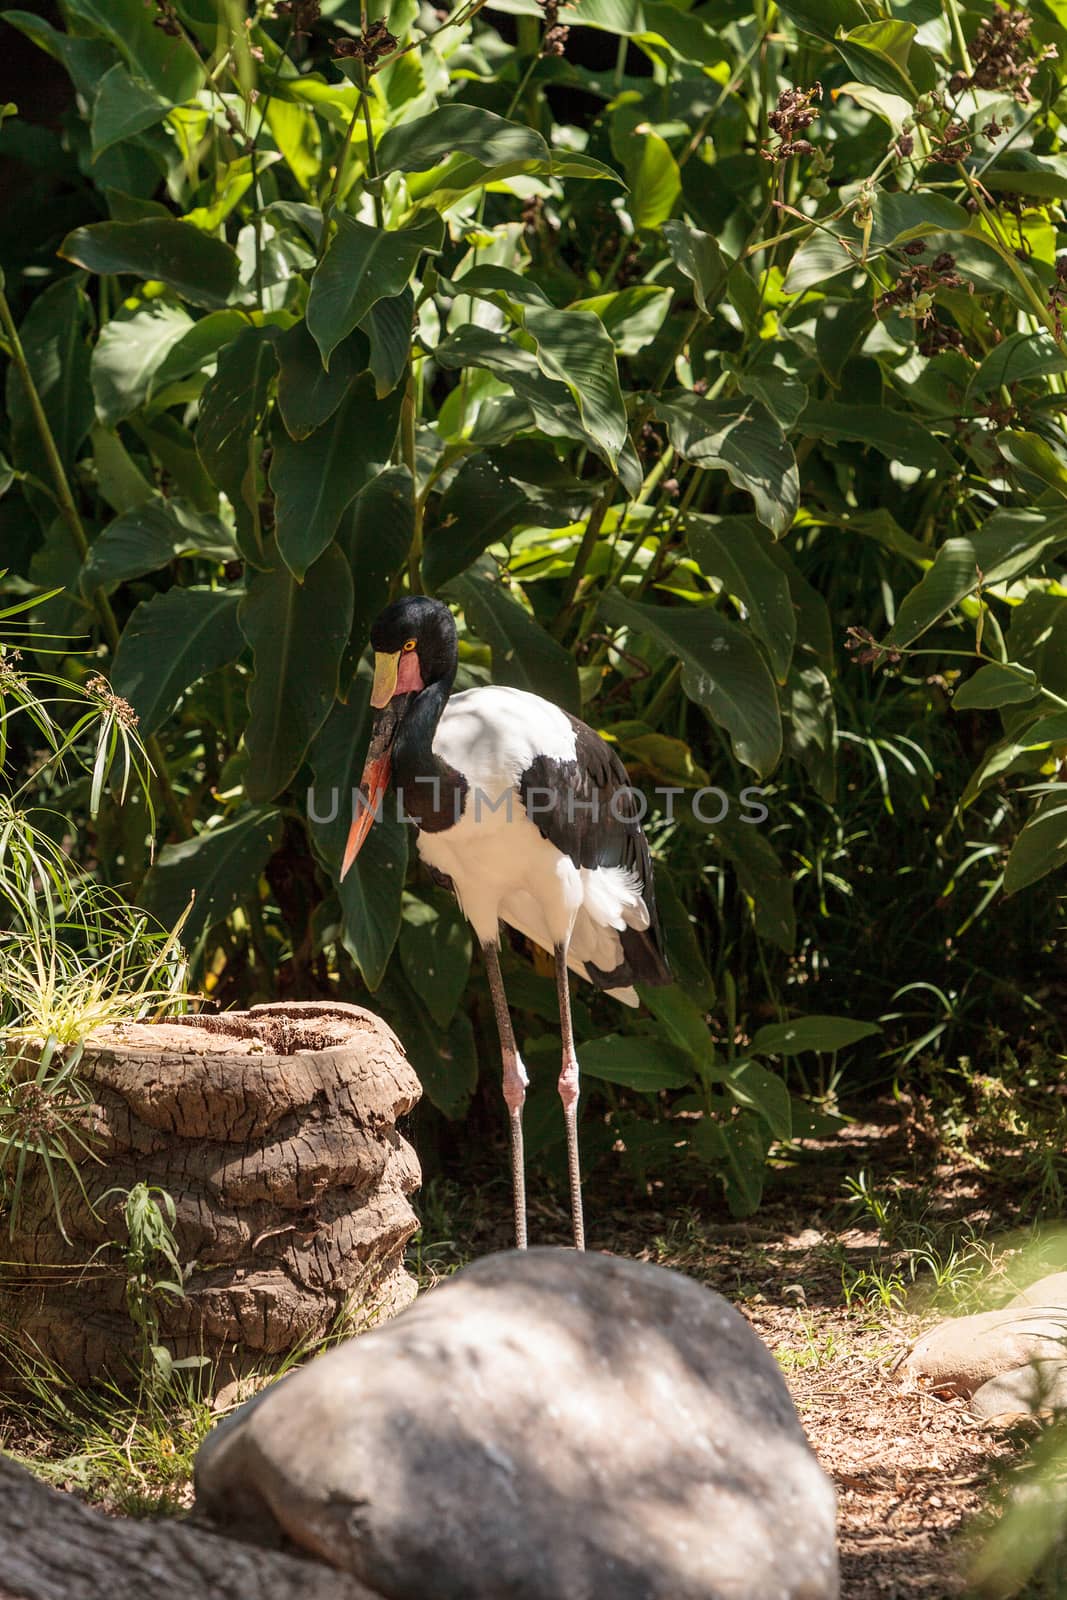 Saddle-billed stork bird Ephippiorhynchus senegalensis is found in the wetlands of central Africa